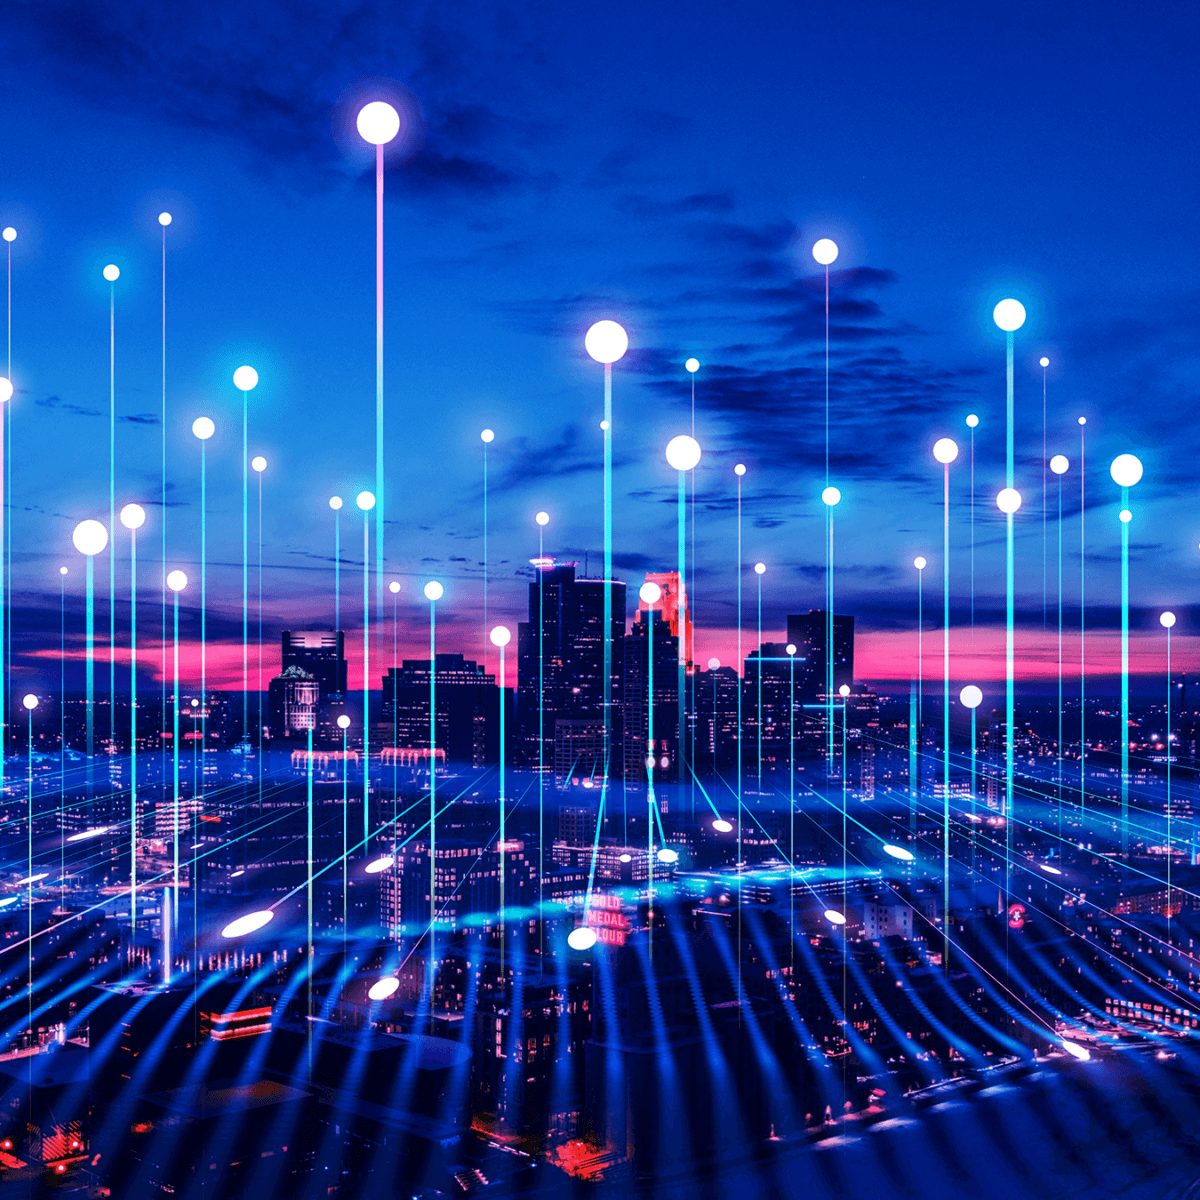 A futuristic image of a digital city in the metaverse